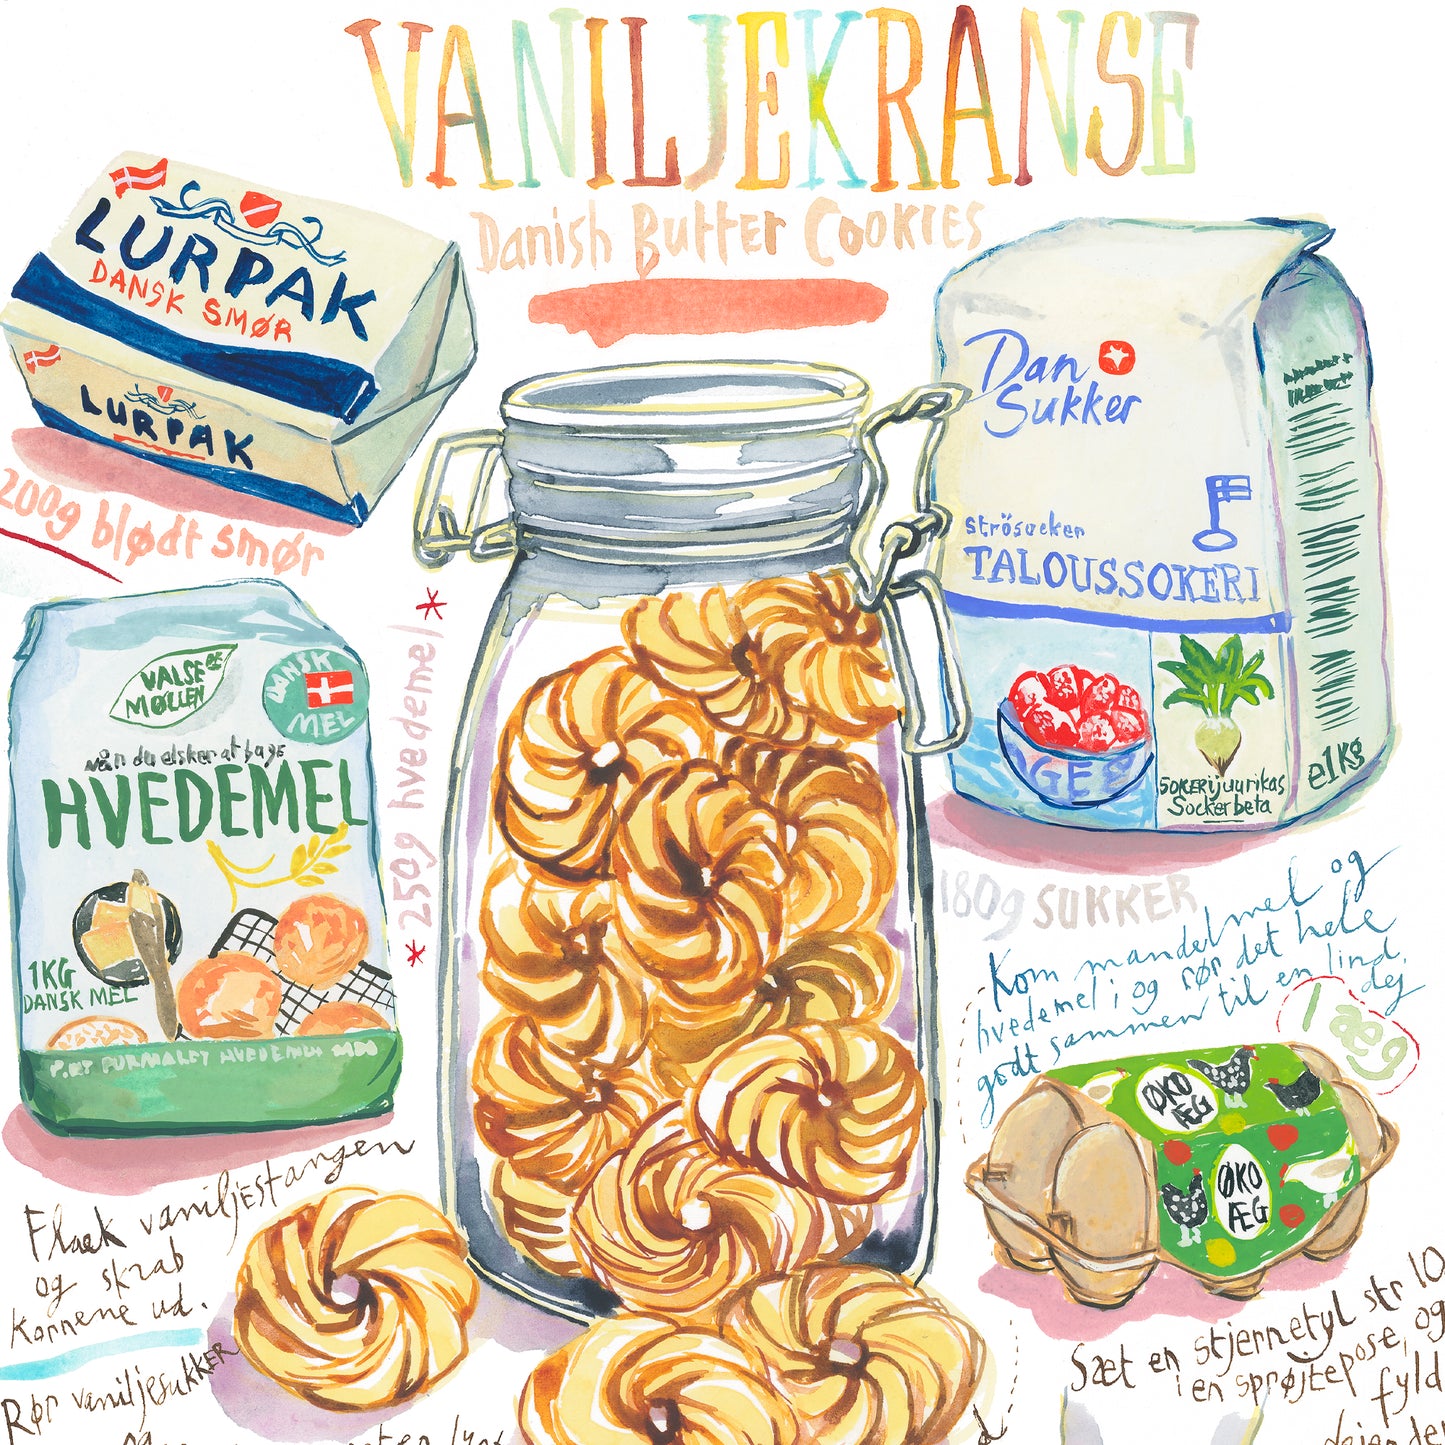 Danish Butter Cookie recipe - Vaniljekranse